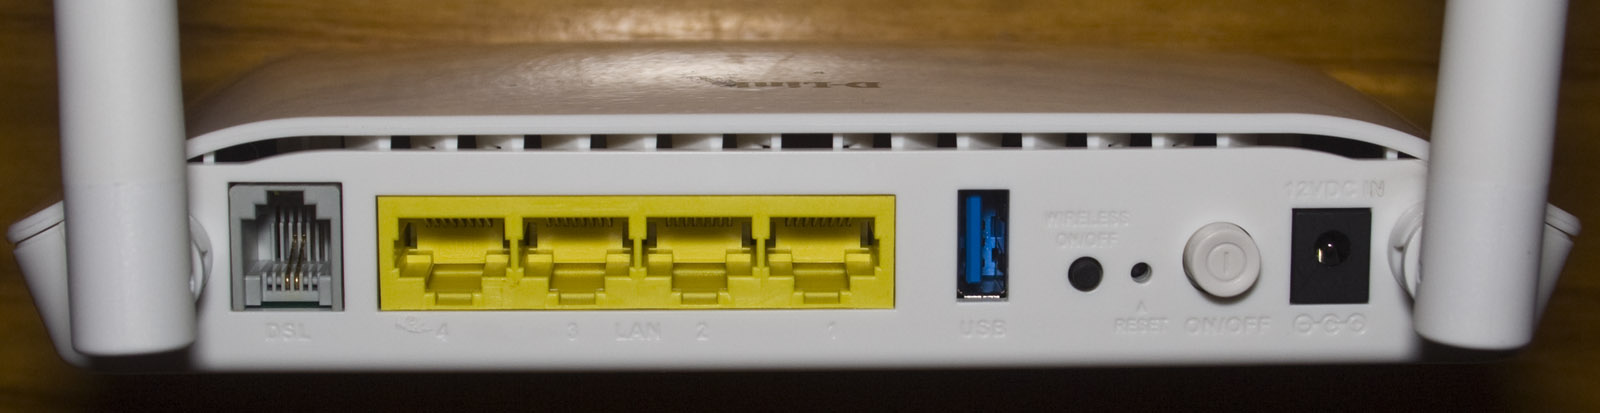 Inside The D Link Wireless N300 Adsl2 Modem Router Dated 12 Insidegadgets